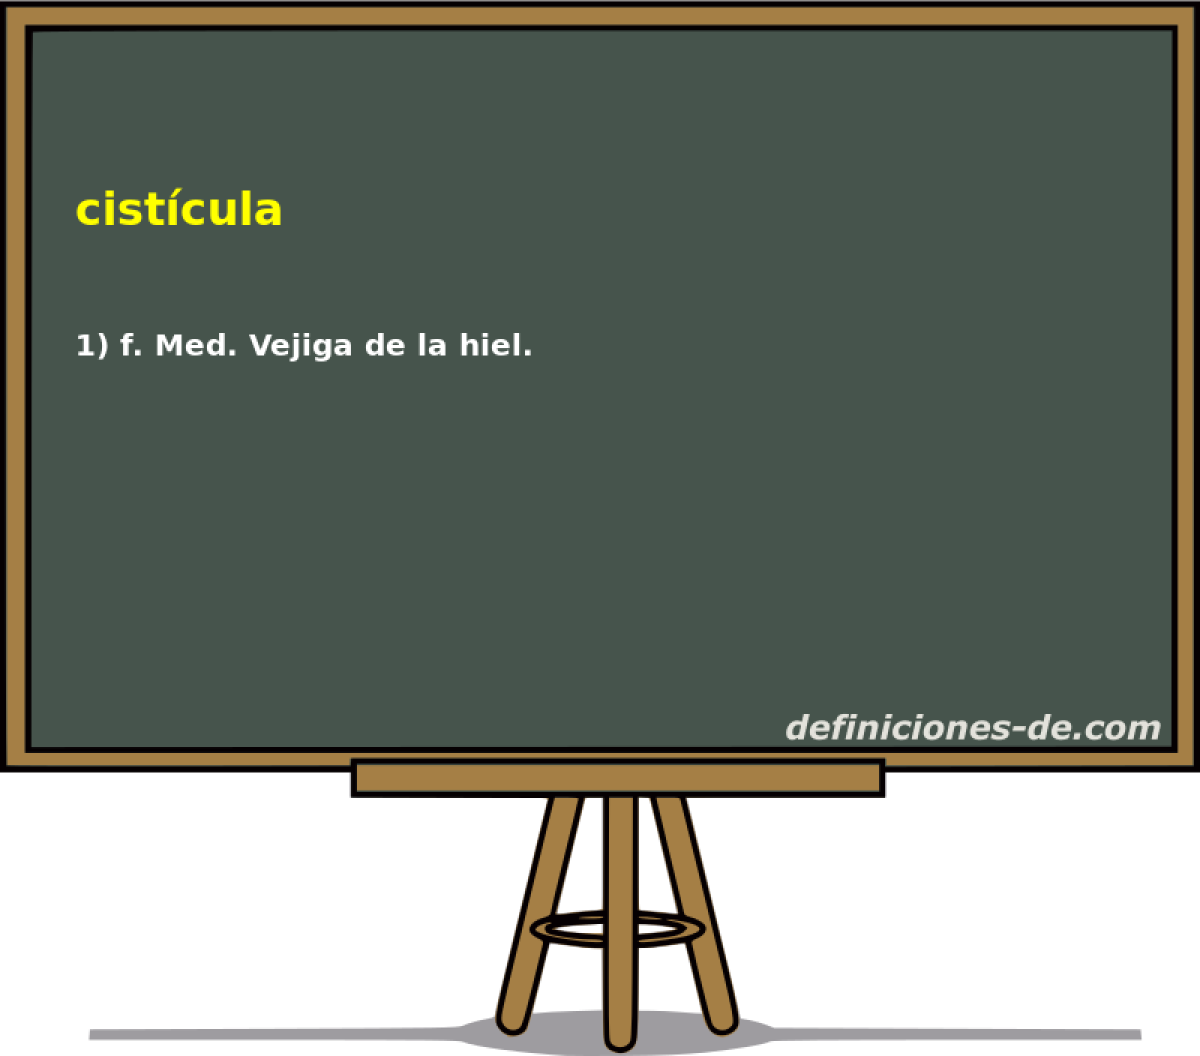 cistcula 